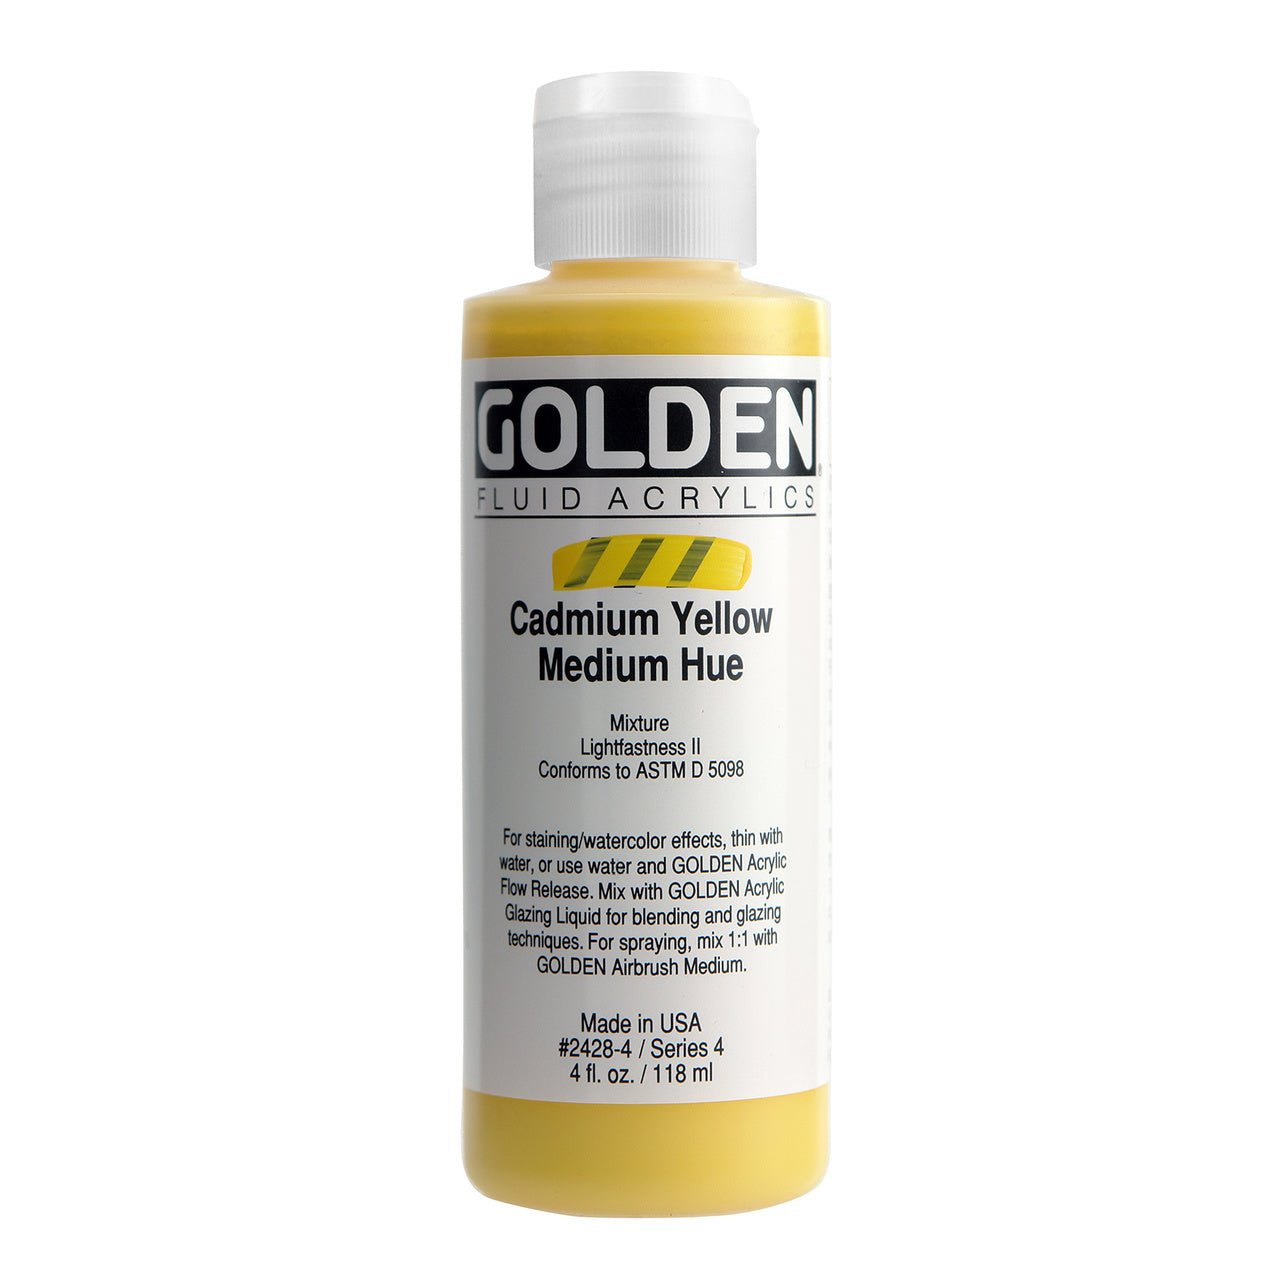 Golden Fluid Acrylic Cadmium Yellow Medium Hue 4 oz - merriartist.com